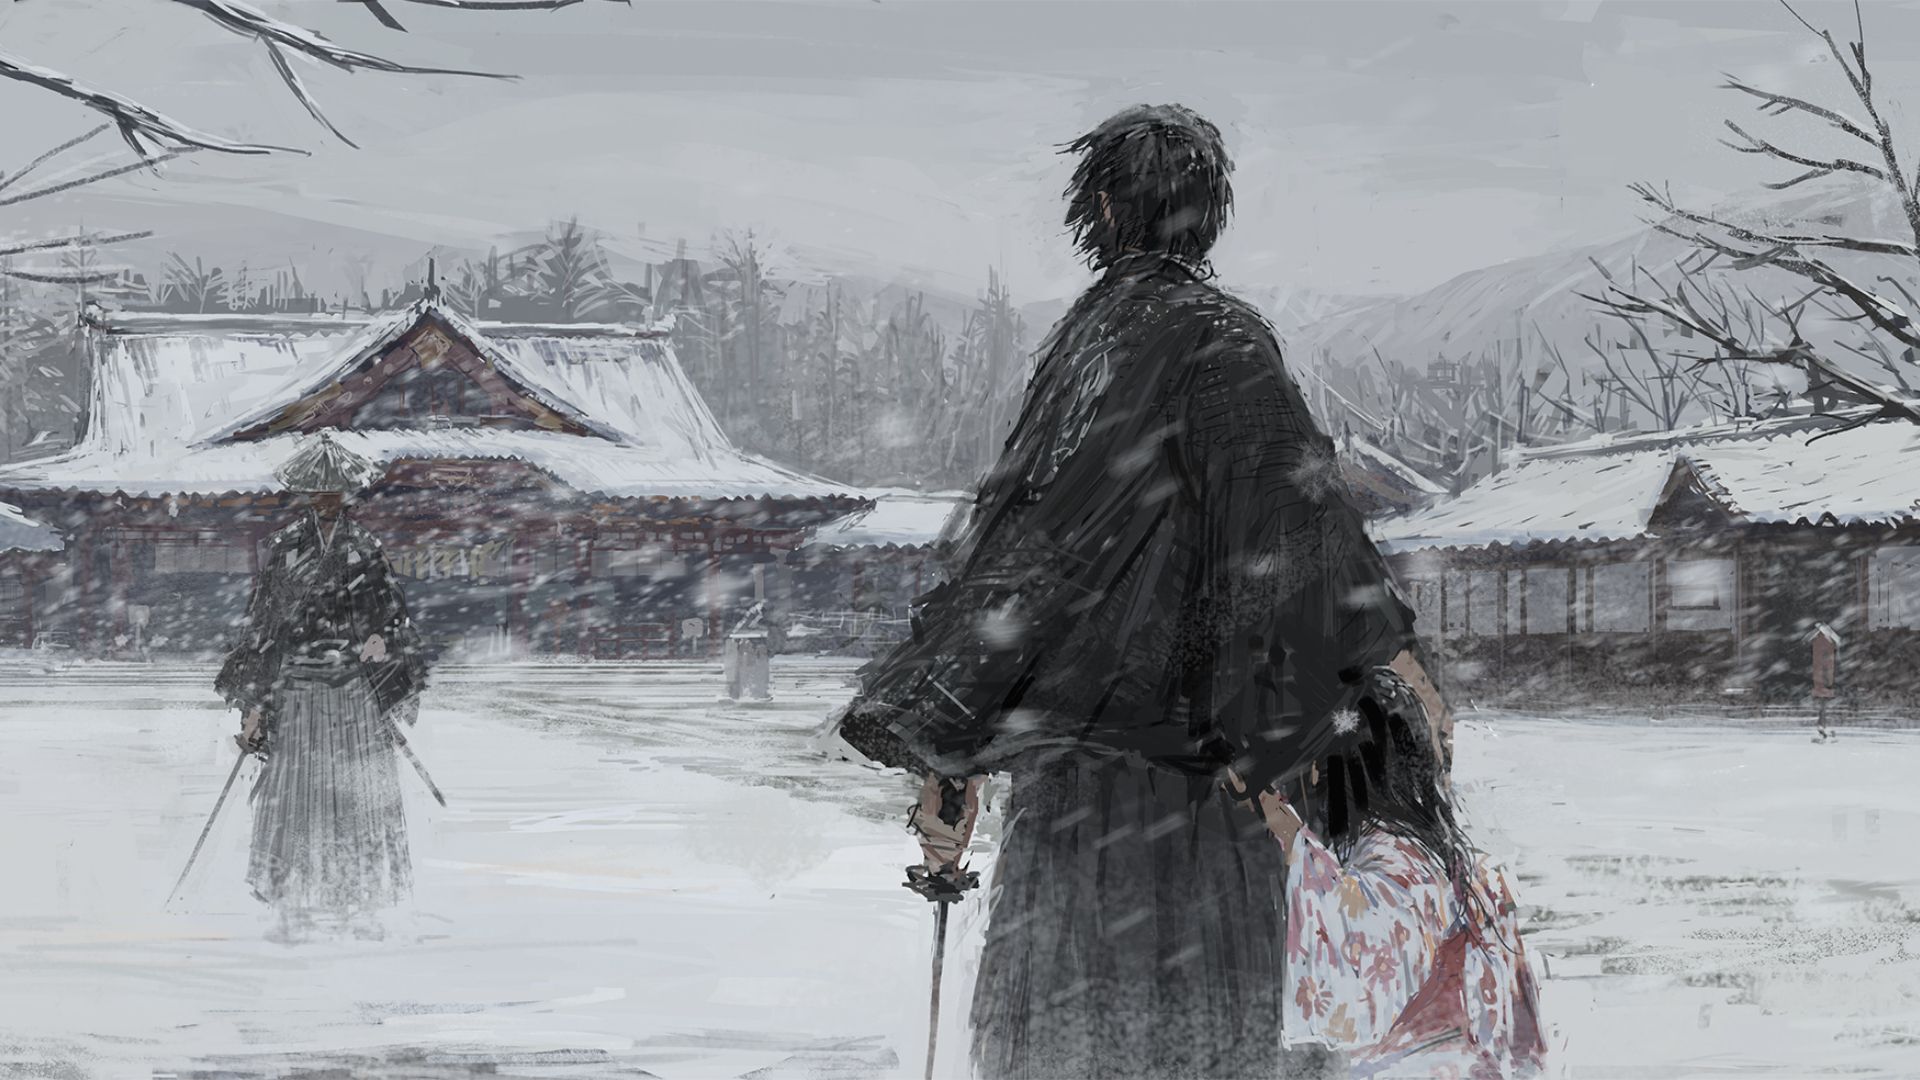 Samurai Warrior in Winter Illustration iPad Air Wallpaper, HD Fantasy 4K Wallpaper, Image, Photo and Background